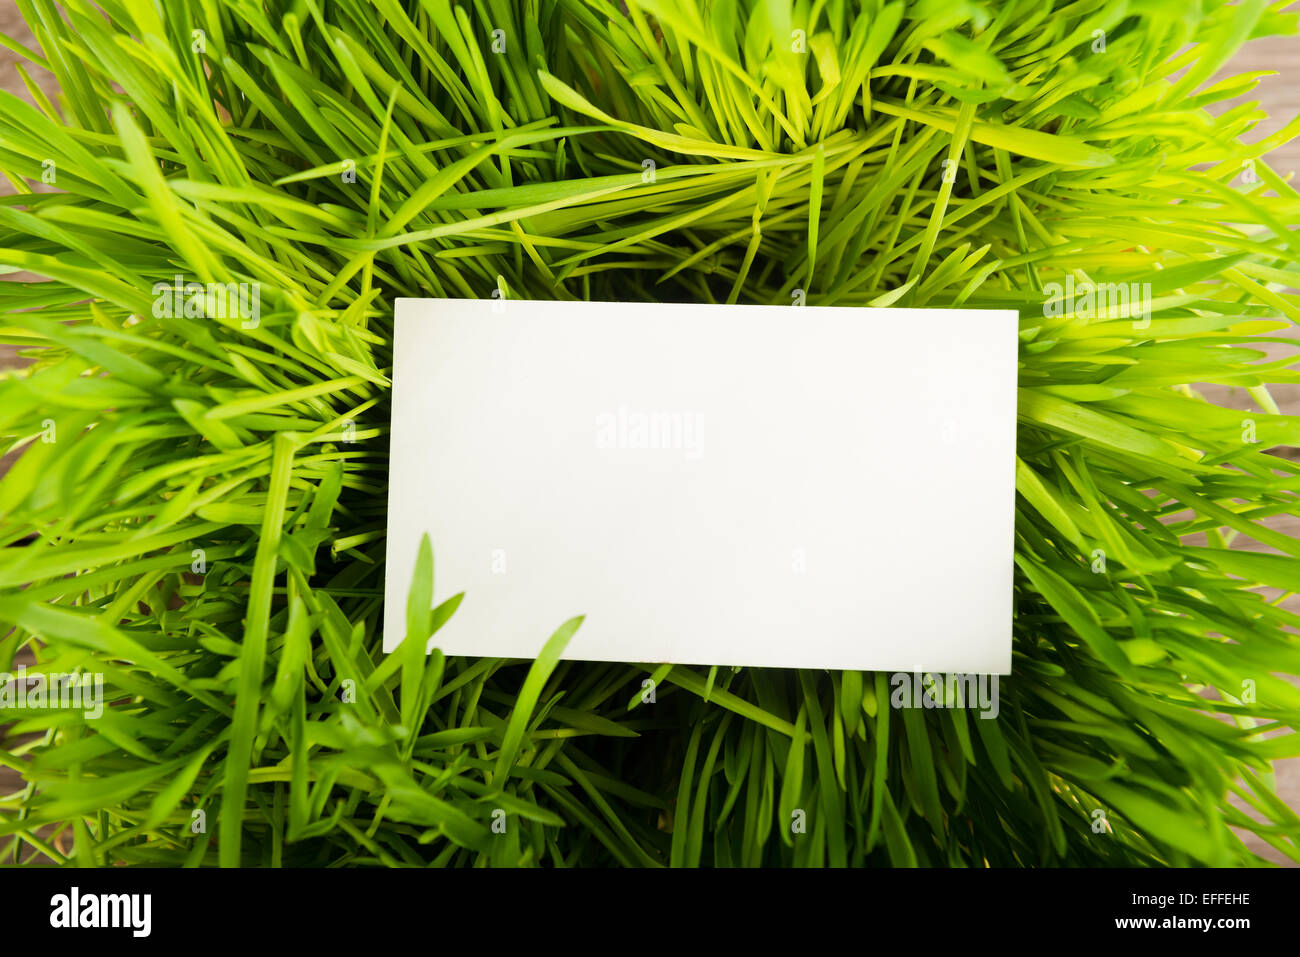 Blank business card dans l'herbe verte fraîche Banque D'Images